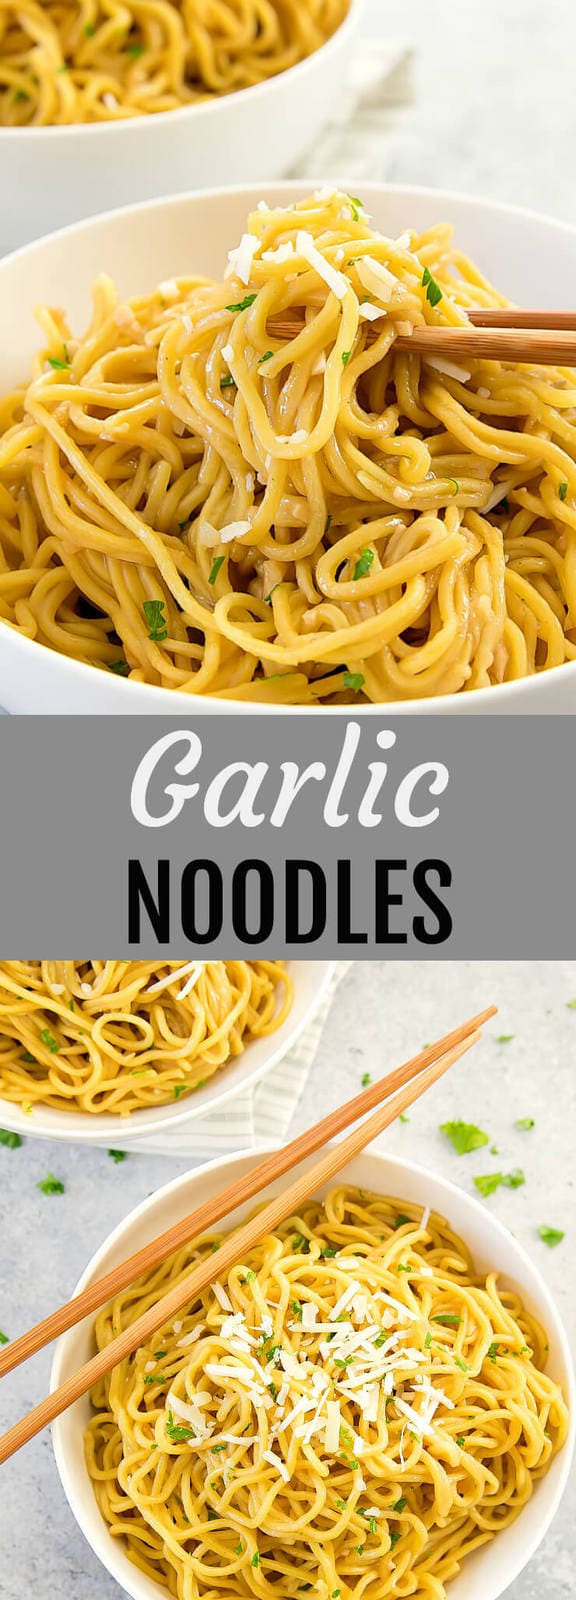 Asian garlic noodles recipe